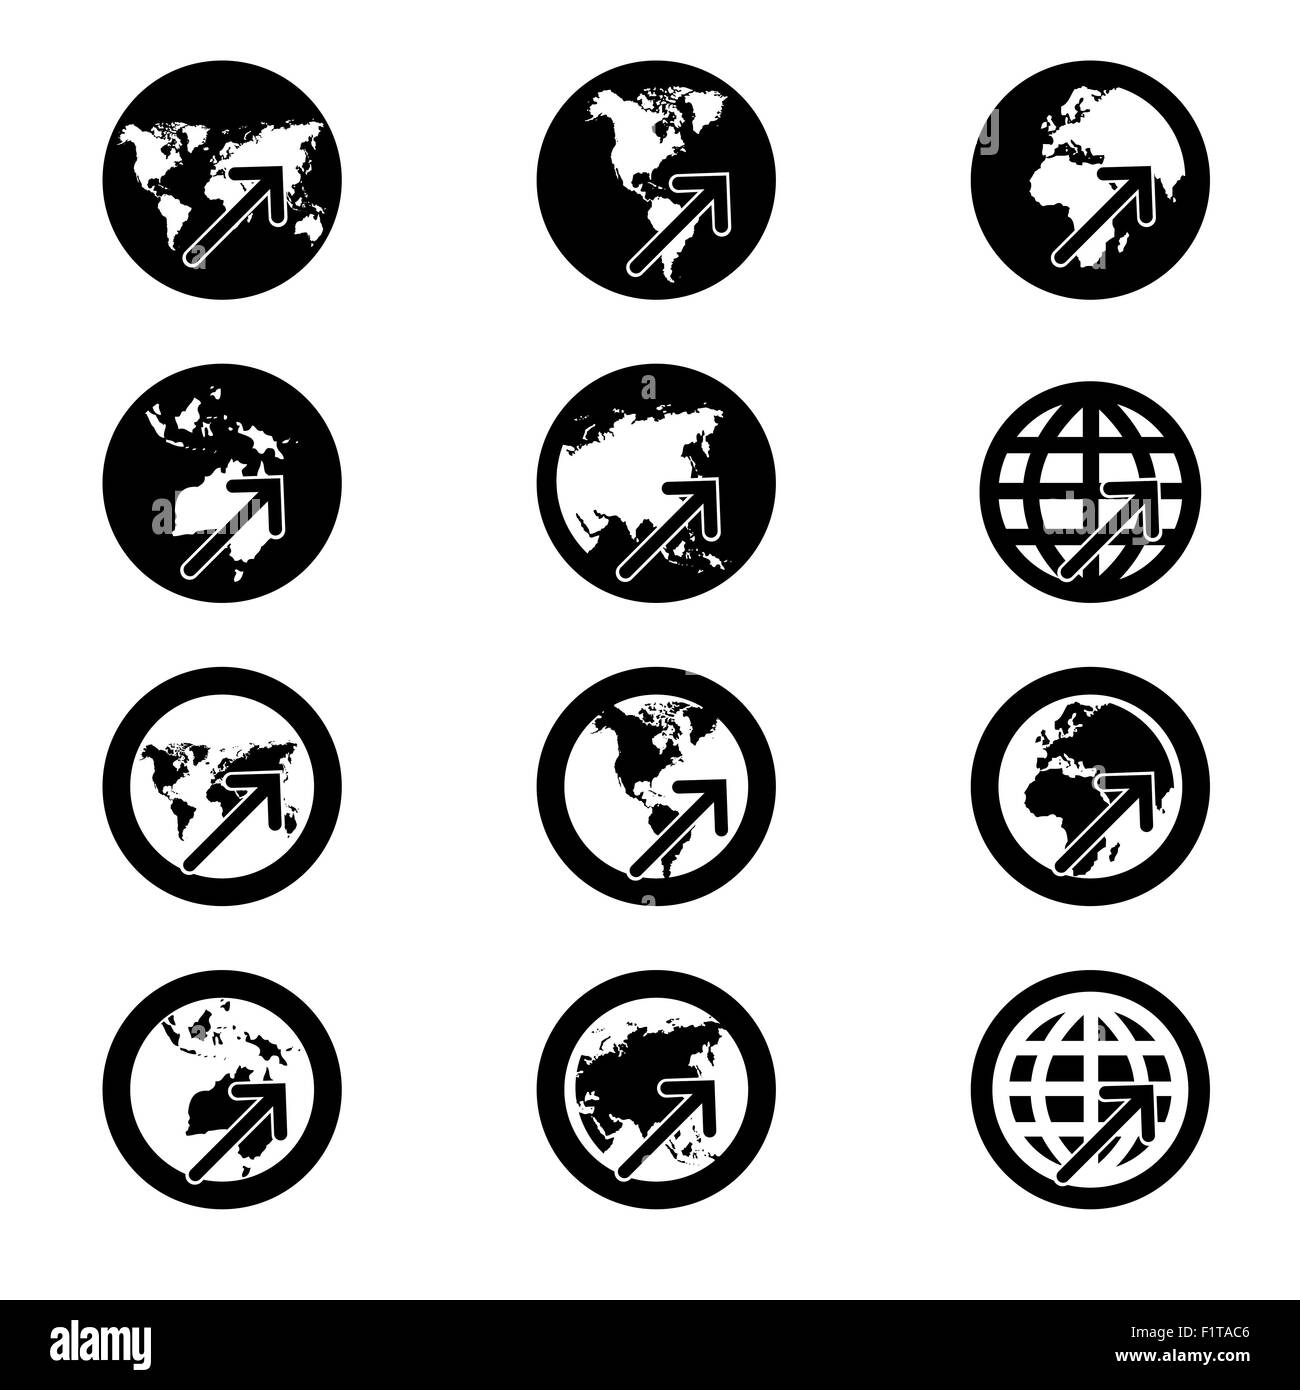 Transport Icon, Welt Karte Zeichen, Vision Konzept, Weltkugel, Business-Konzept. Vektor-illustration Stockfoto